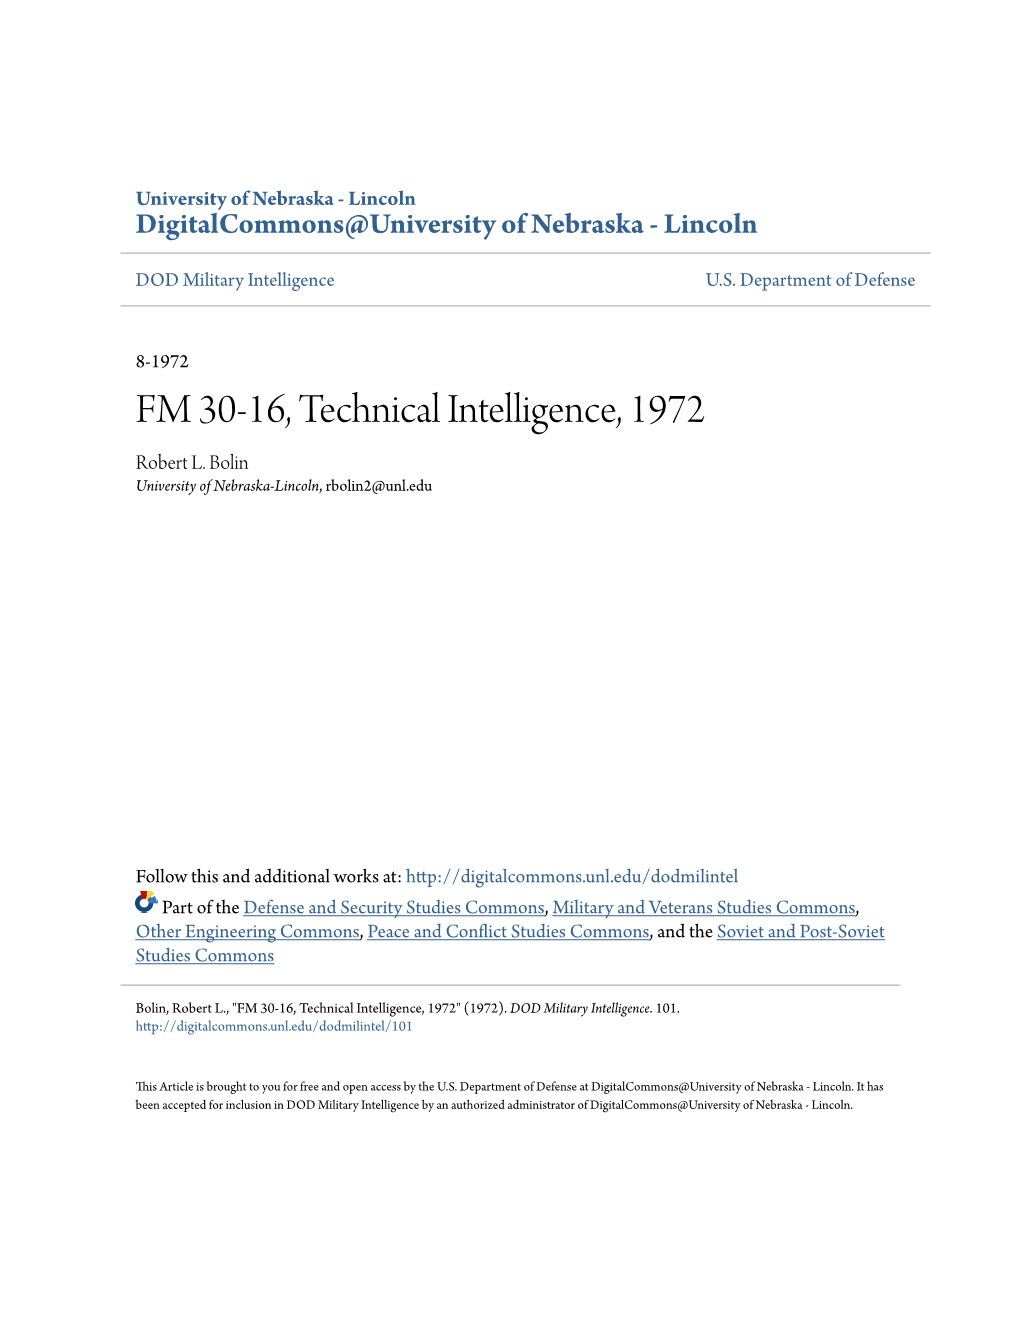 FM 30-16, Technical Intelligence, 1972 Robert L